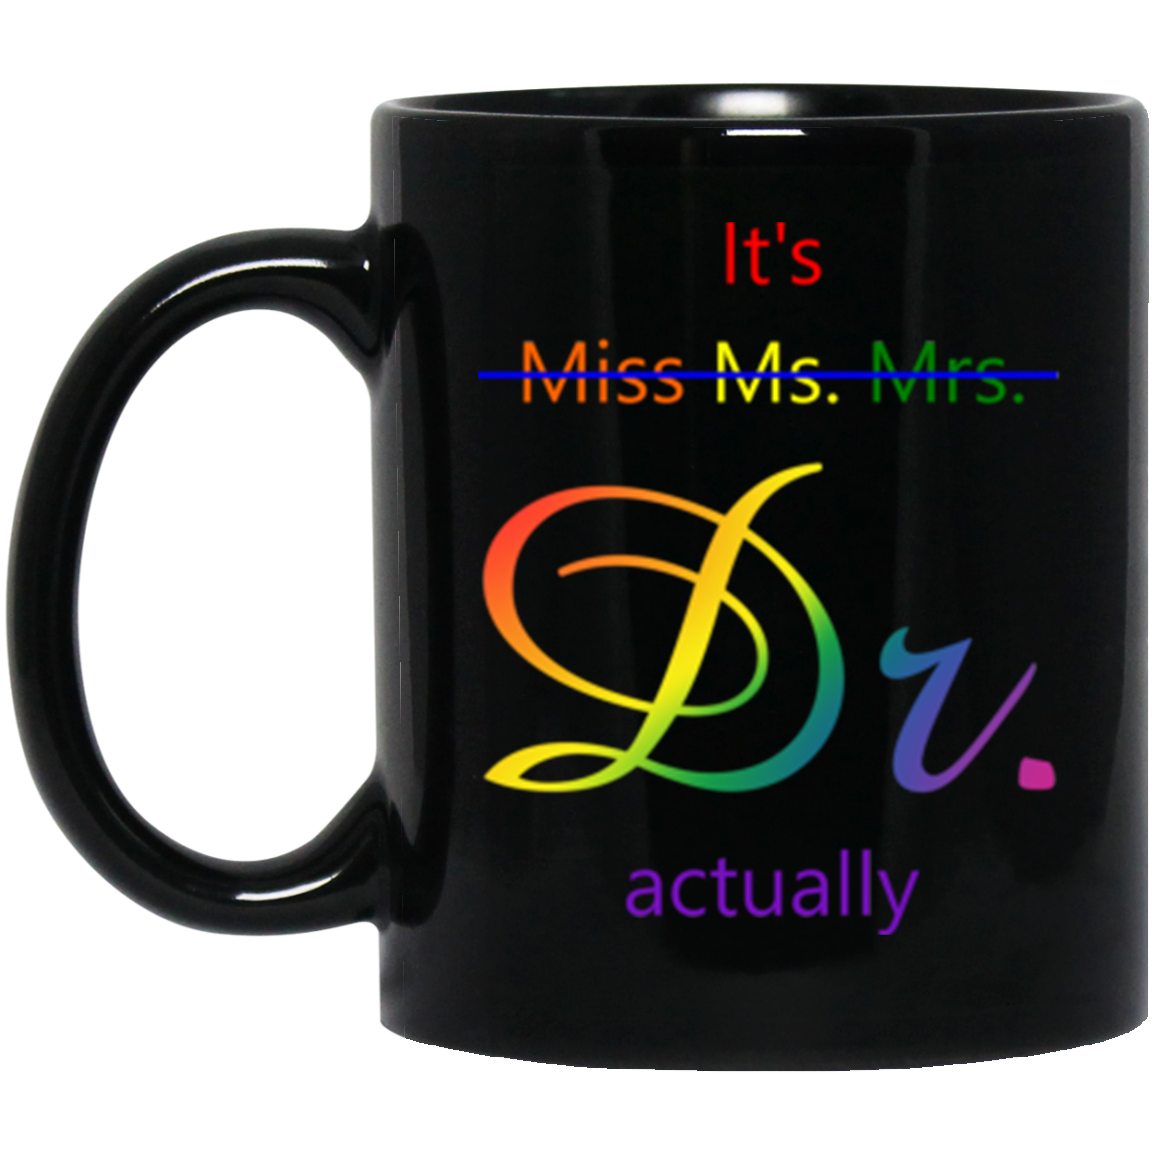 It's miss ms mrs dr actually Black Mug